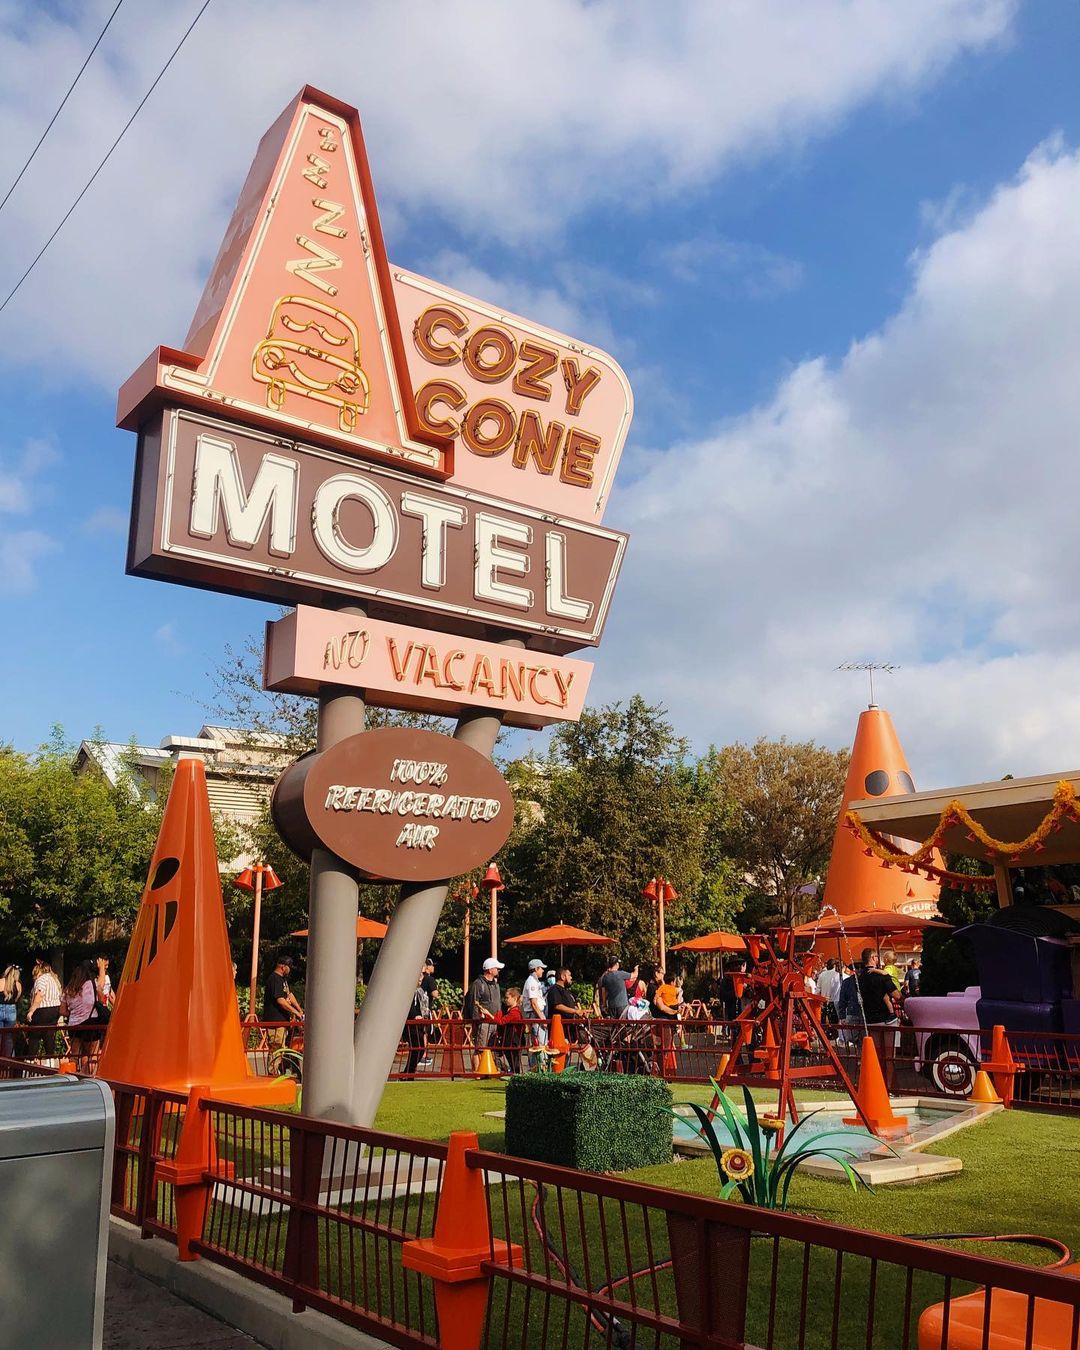 Cozy Cone Motal at Disneyland California Adventure